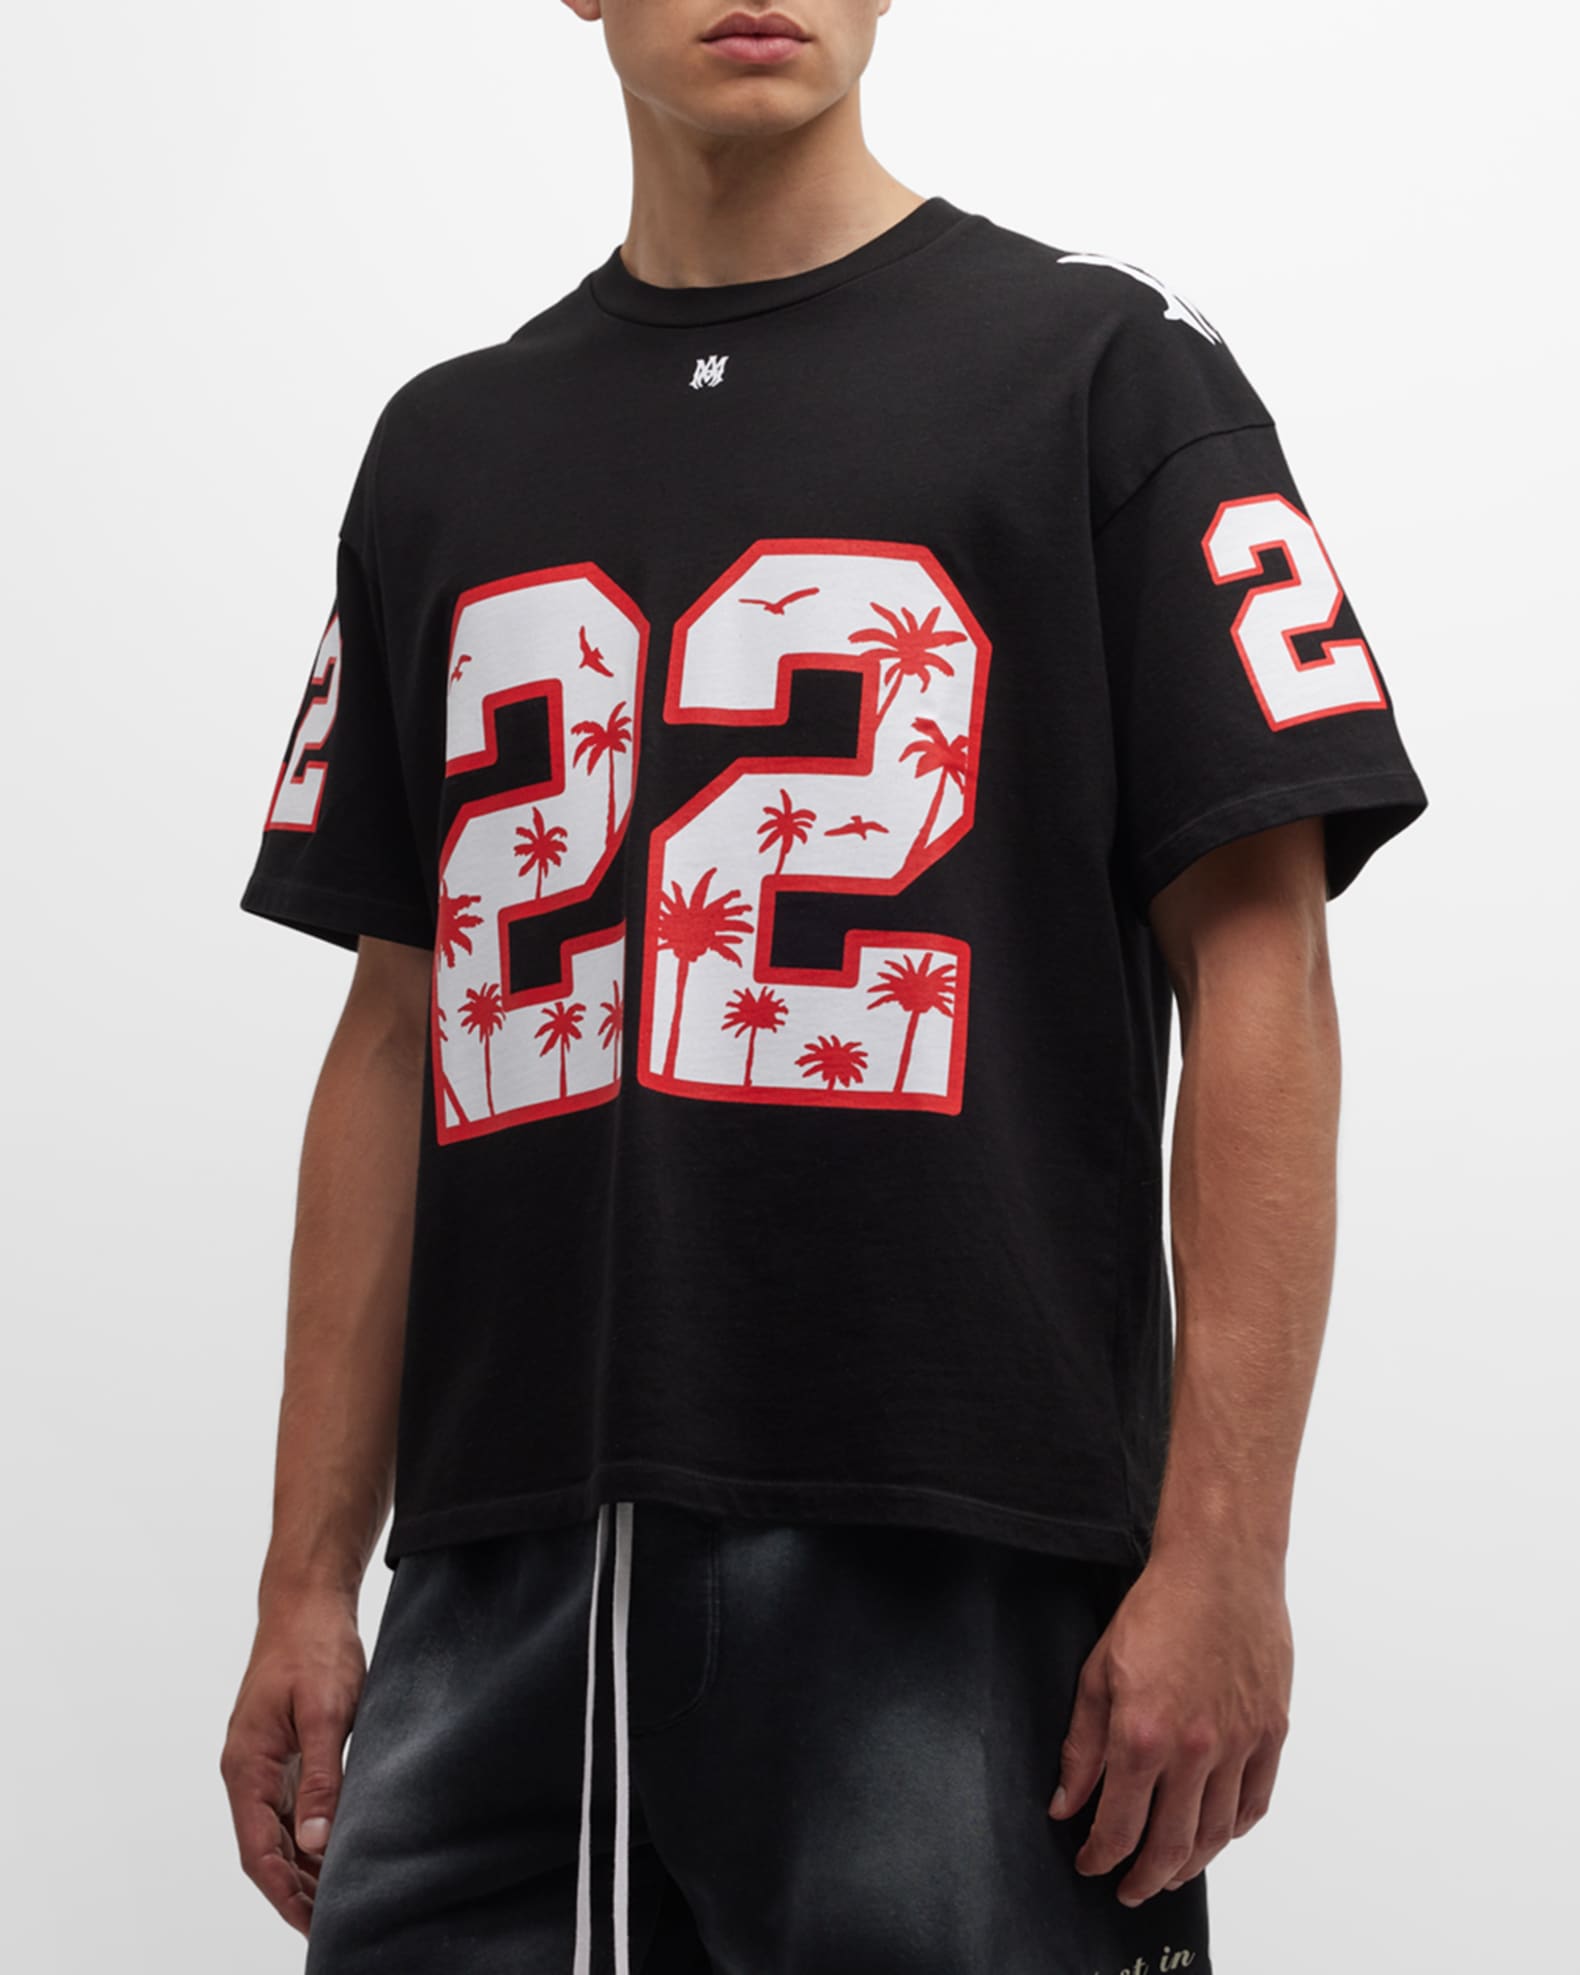 Amiri Men's Oversized Football T-Shirt